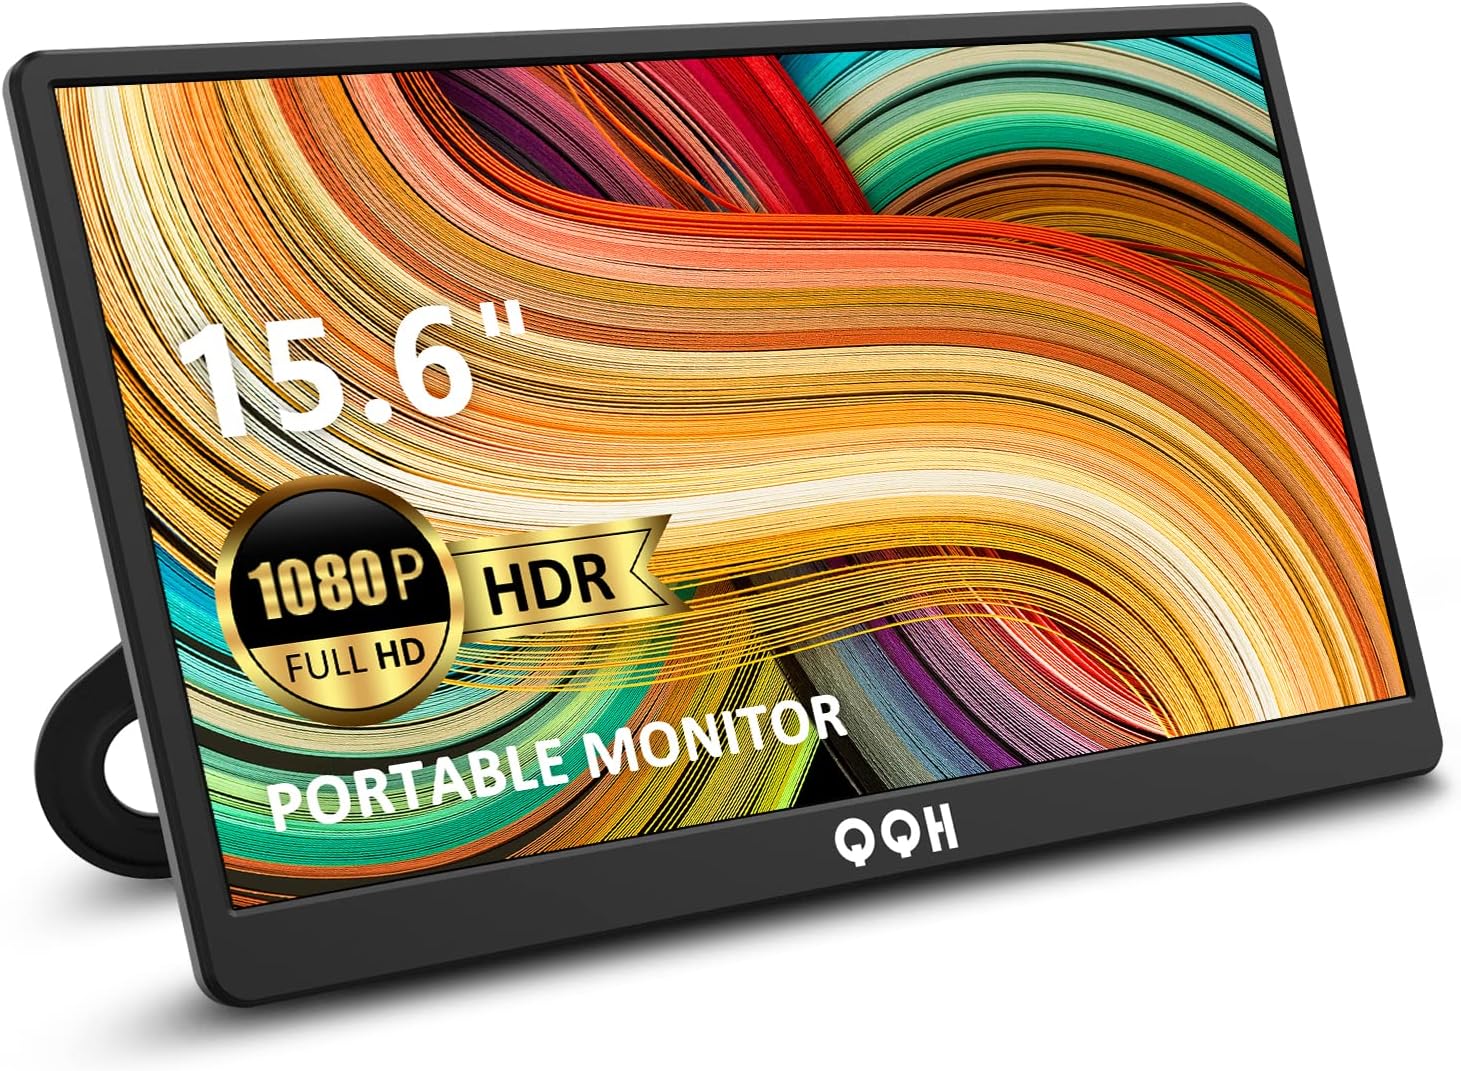 Portable Monitor, QQH 15.6